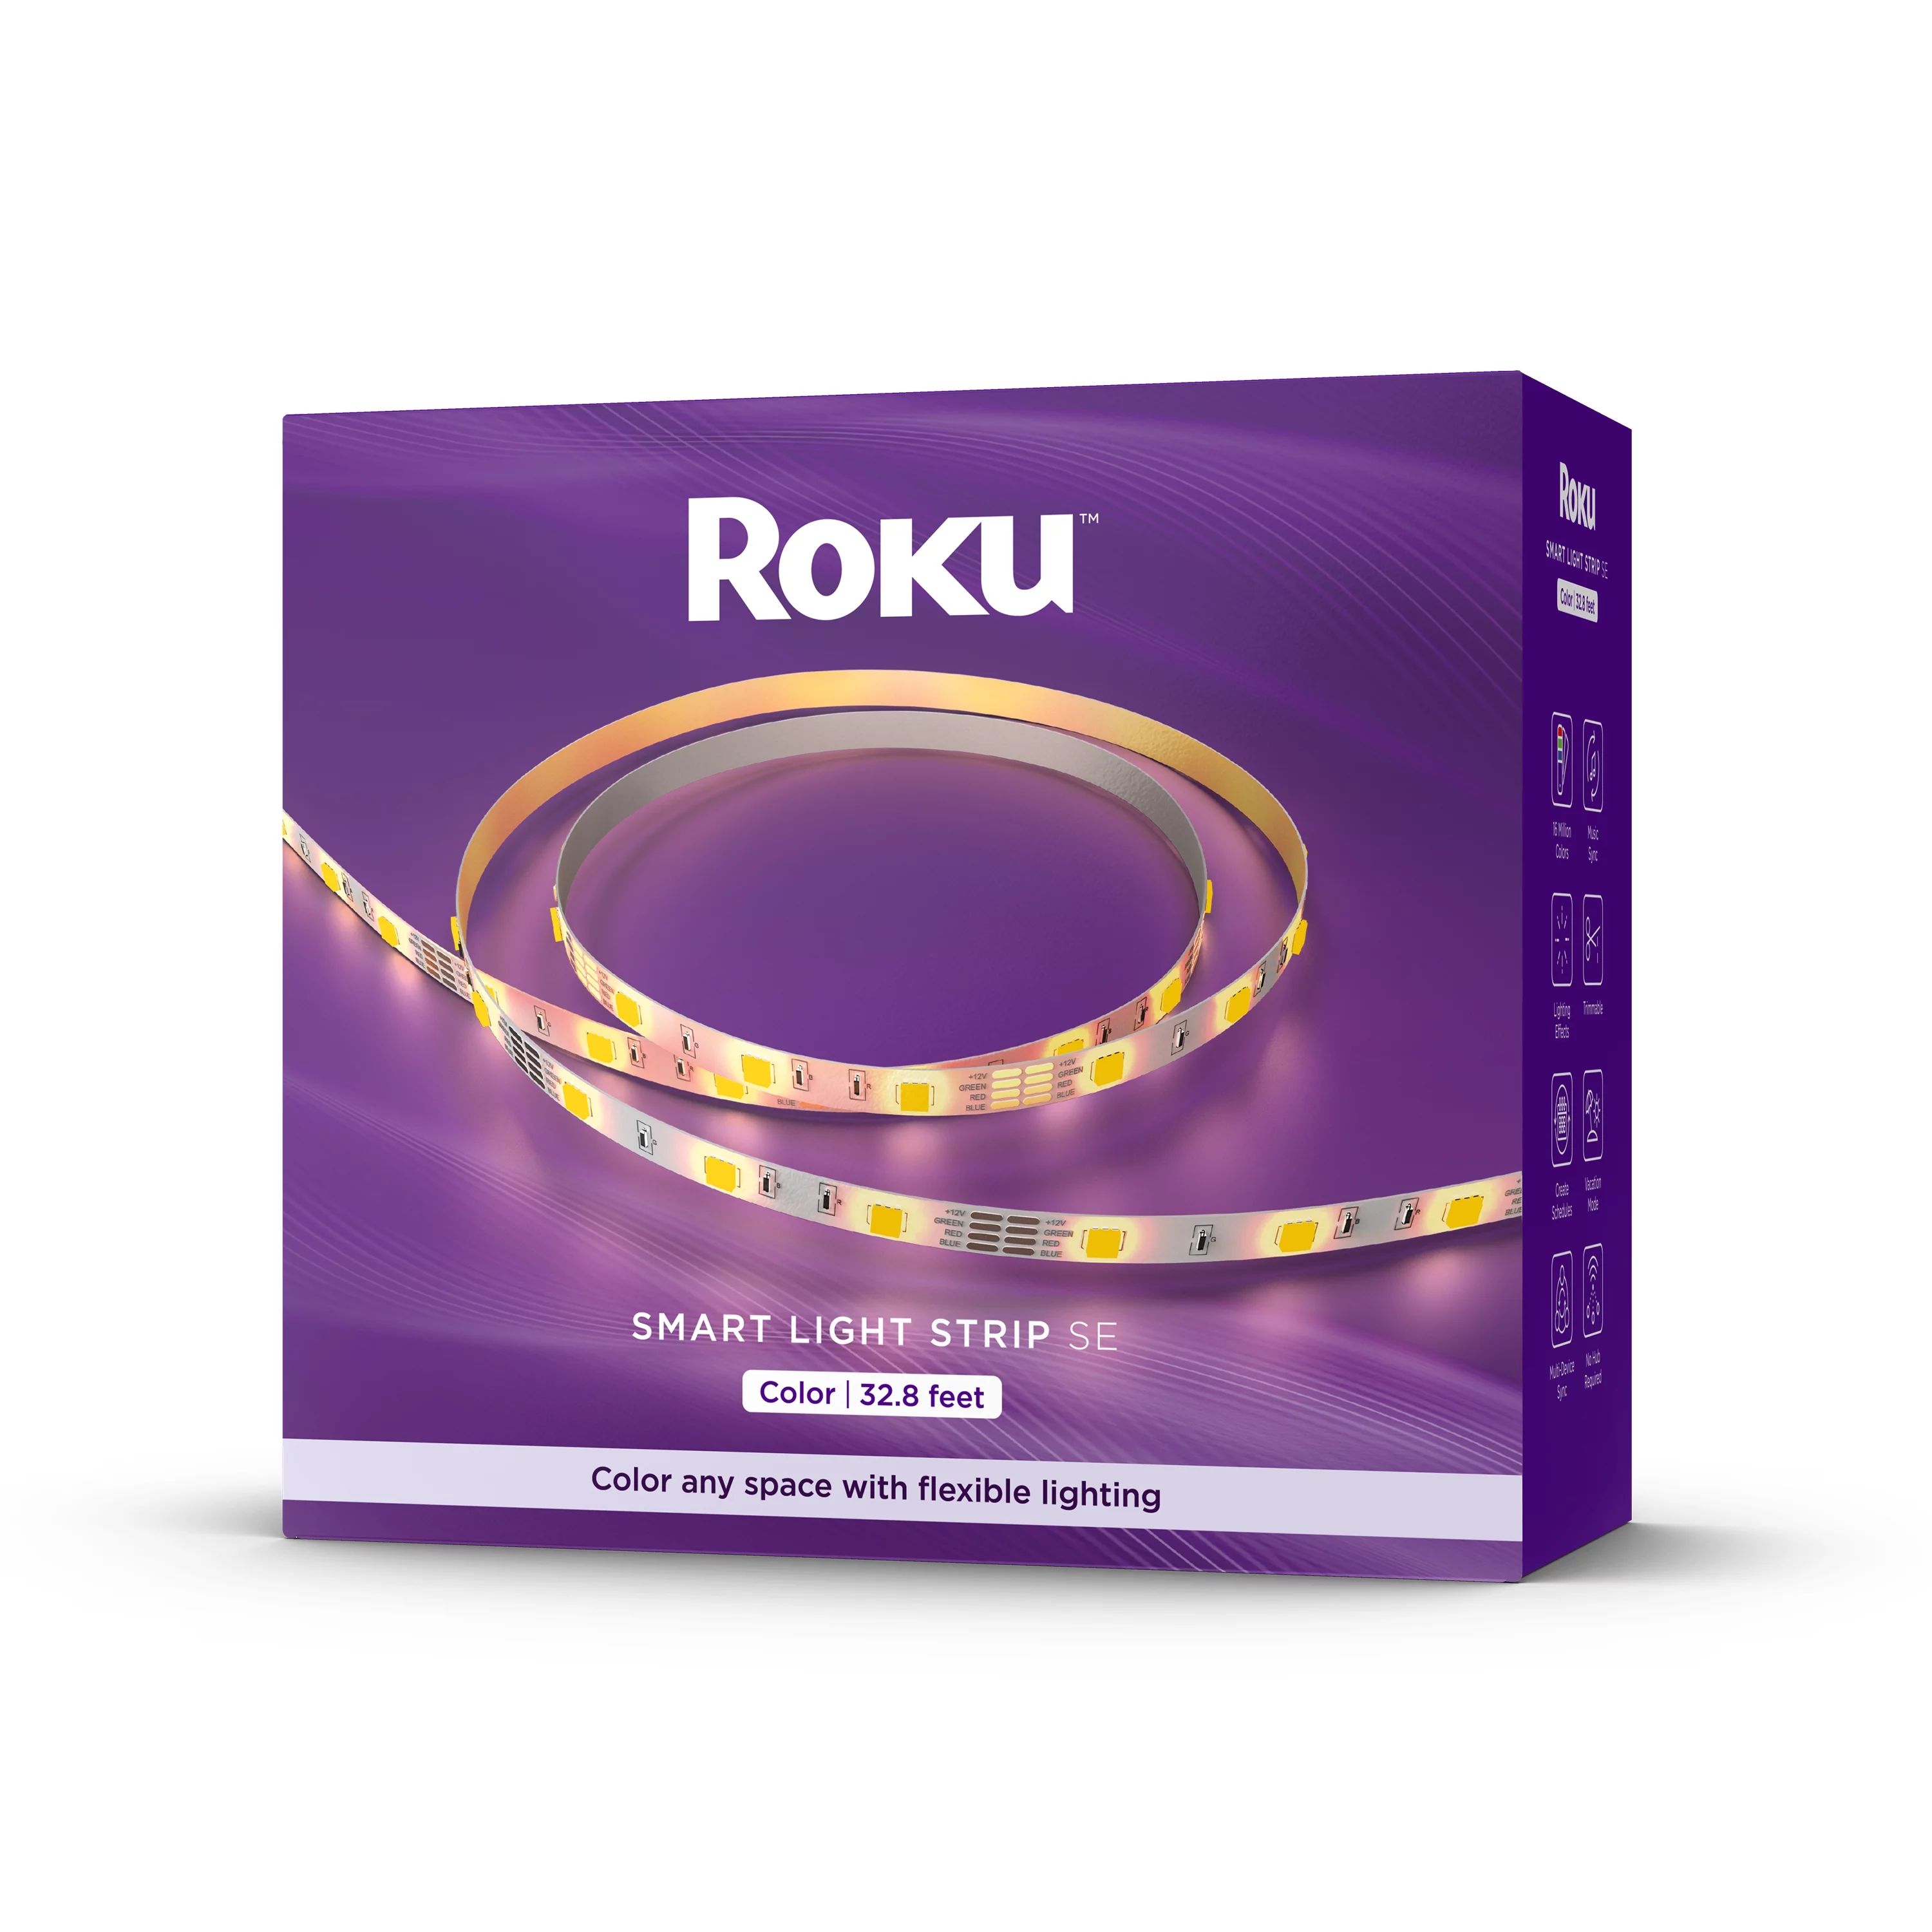 Roku Smart Home Smart Light Strip SE 32.8 Foot with 16 Million Color Options, White Light Option,... | Walmart (US)